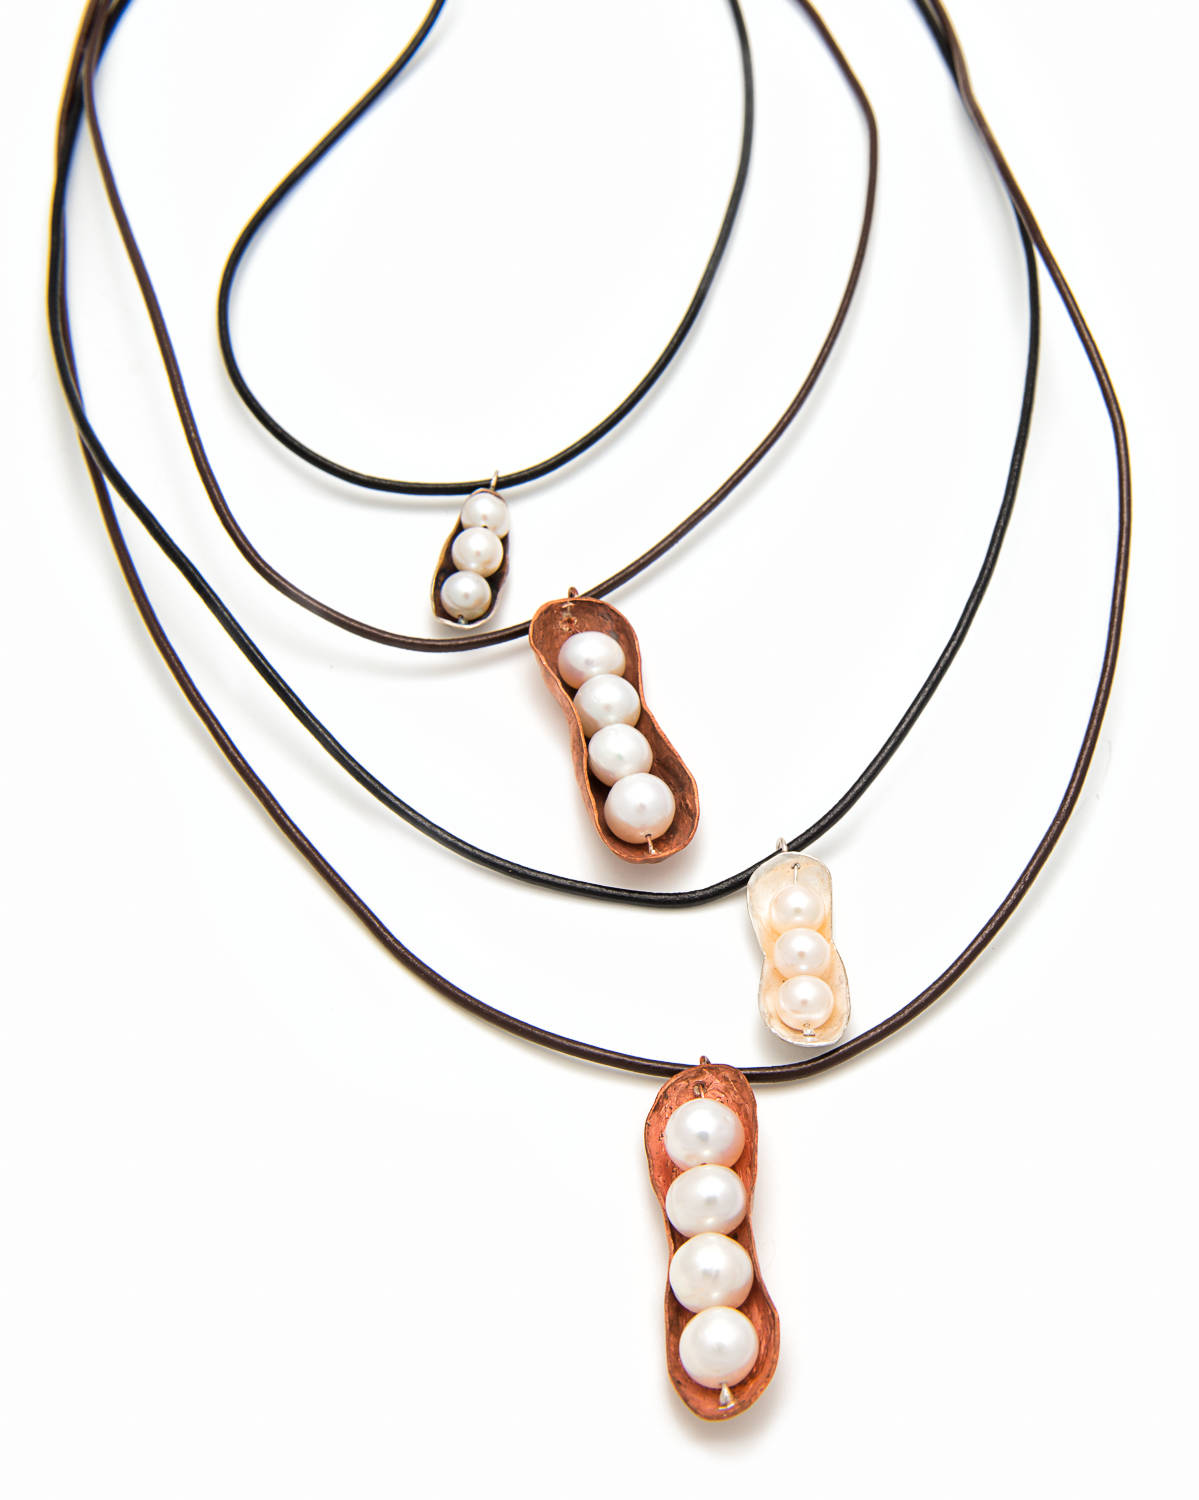 Peanut Pearls Necklace by Sylvia Dawe (Sterling Silver Peanut, Medium 7mm Pearls)